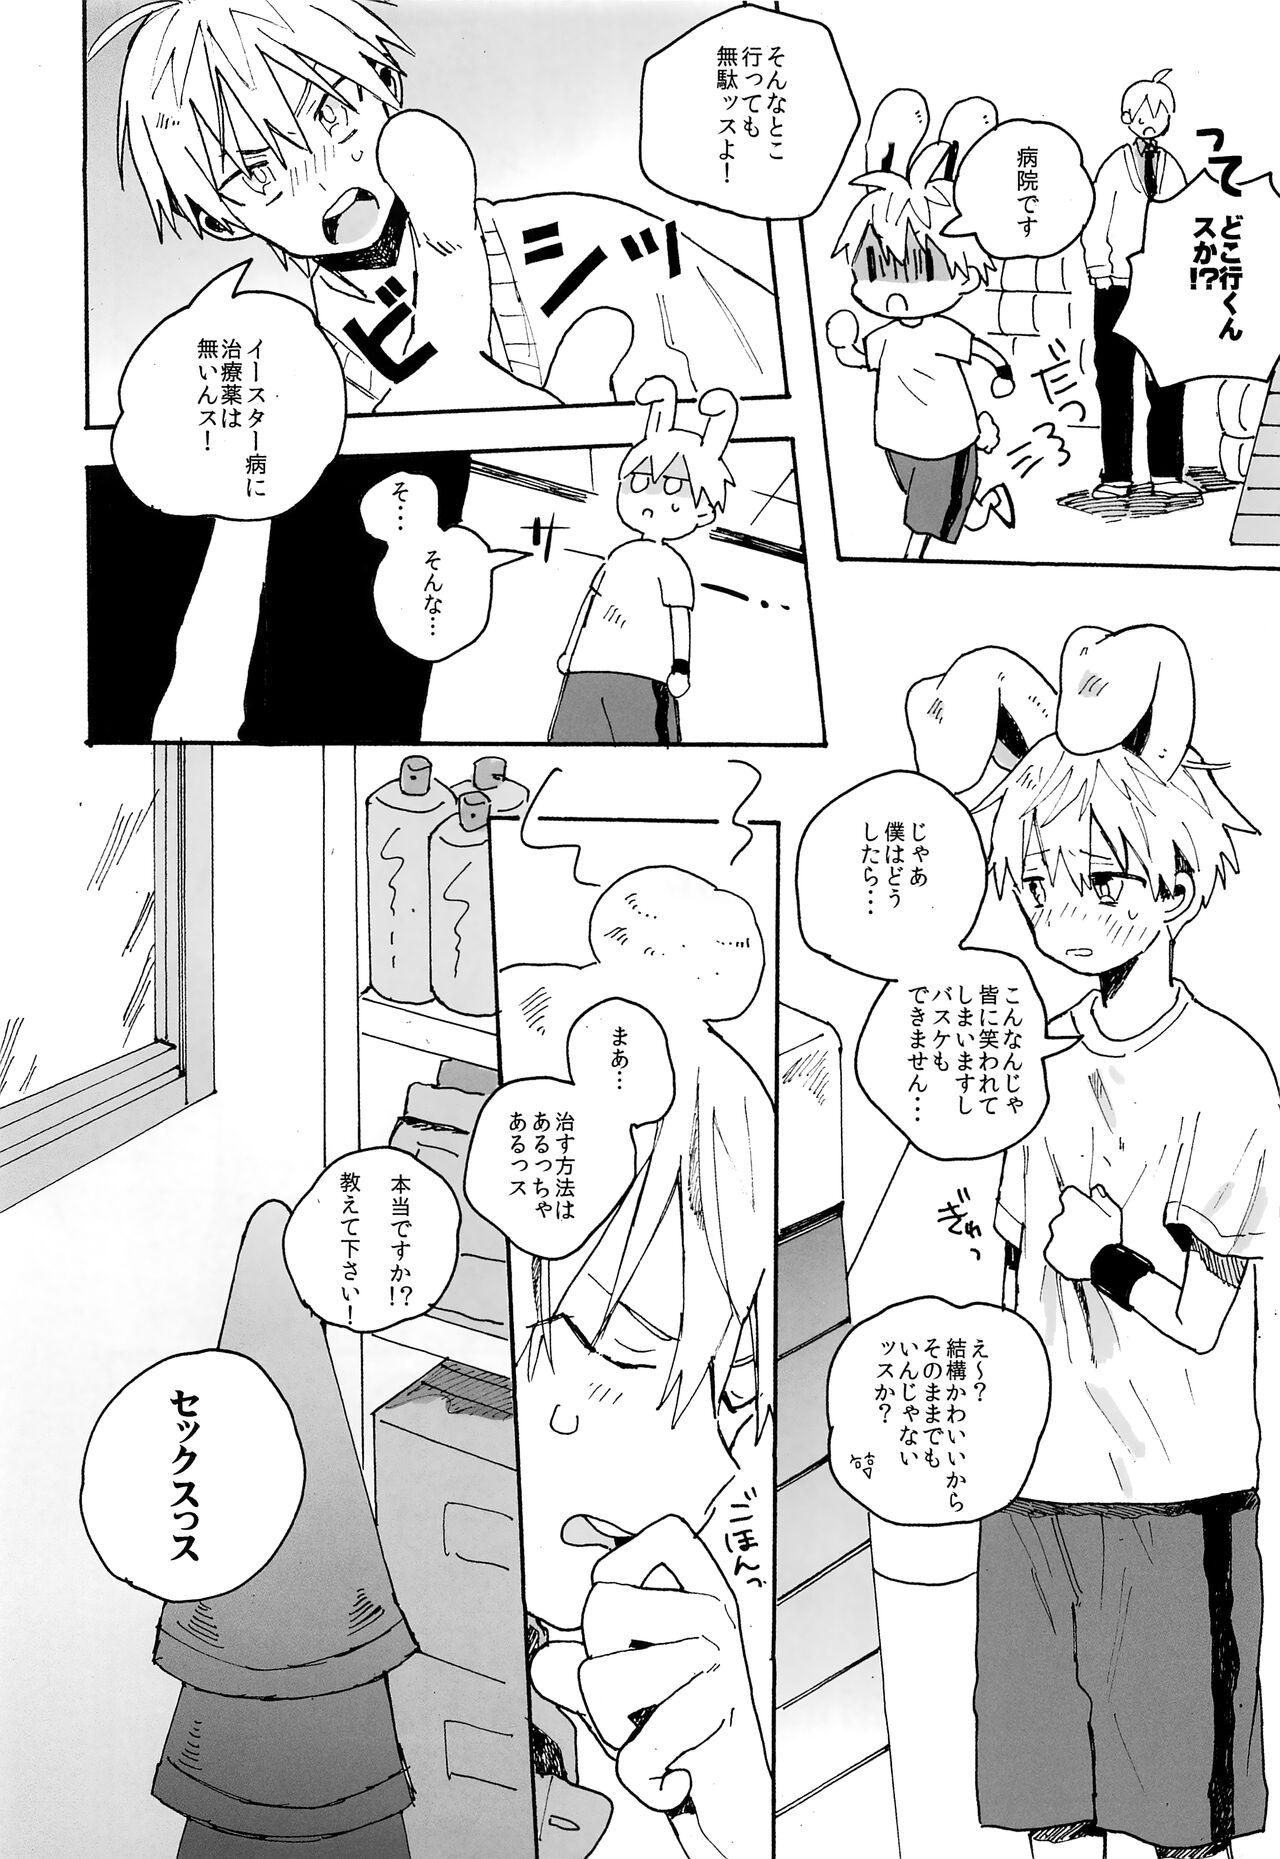 Blackmail my cute baby bunny - Kuroko no basuke Pussyfucking - Page 5